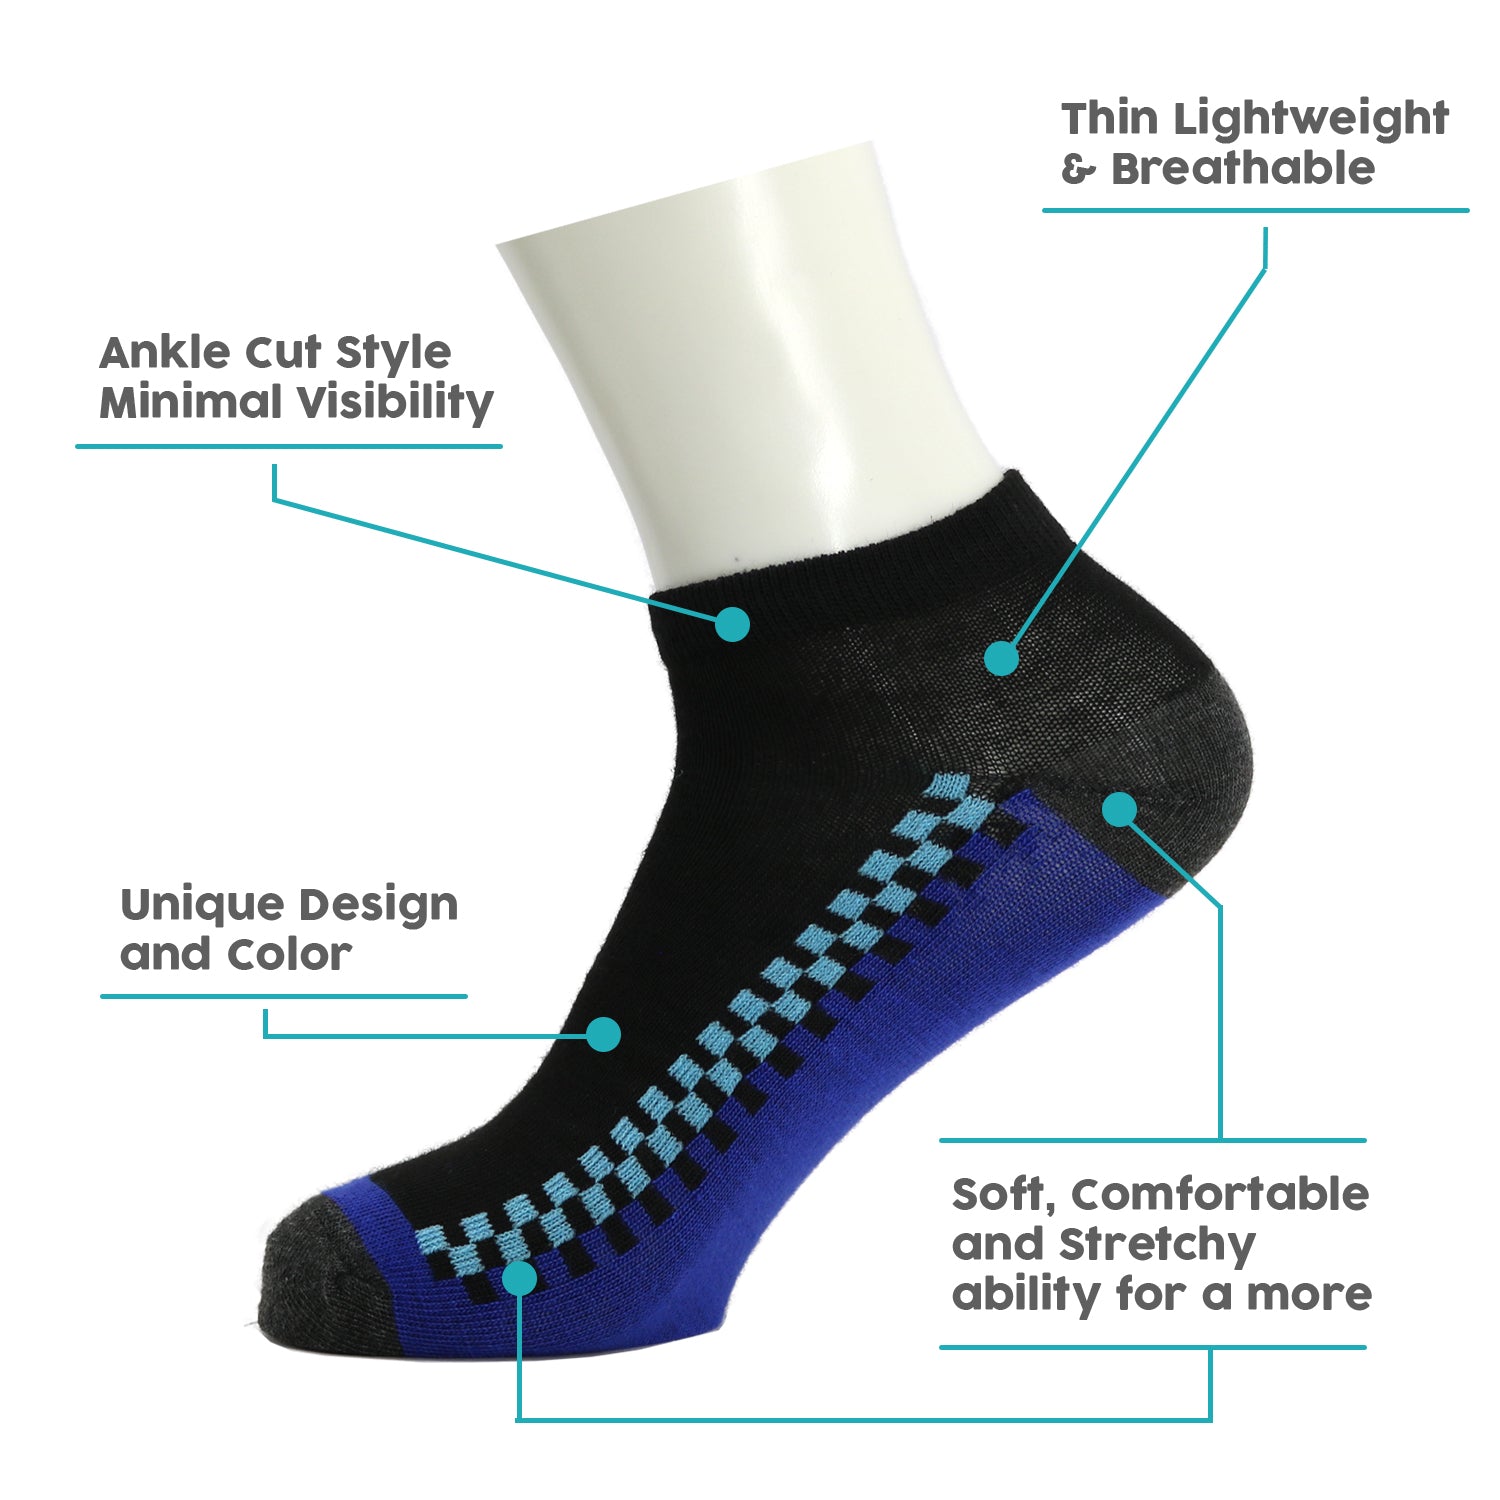 Men's Low Cut Wholesale Sock, Size 9-11 in Assorted Designs - Bulk Case of 144 Pairs